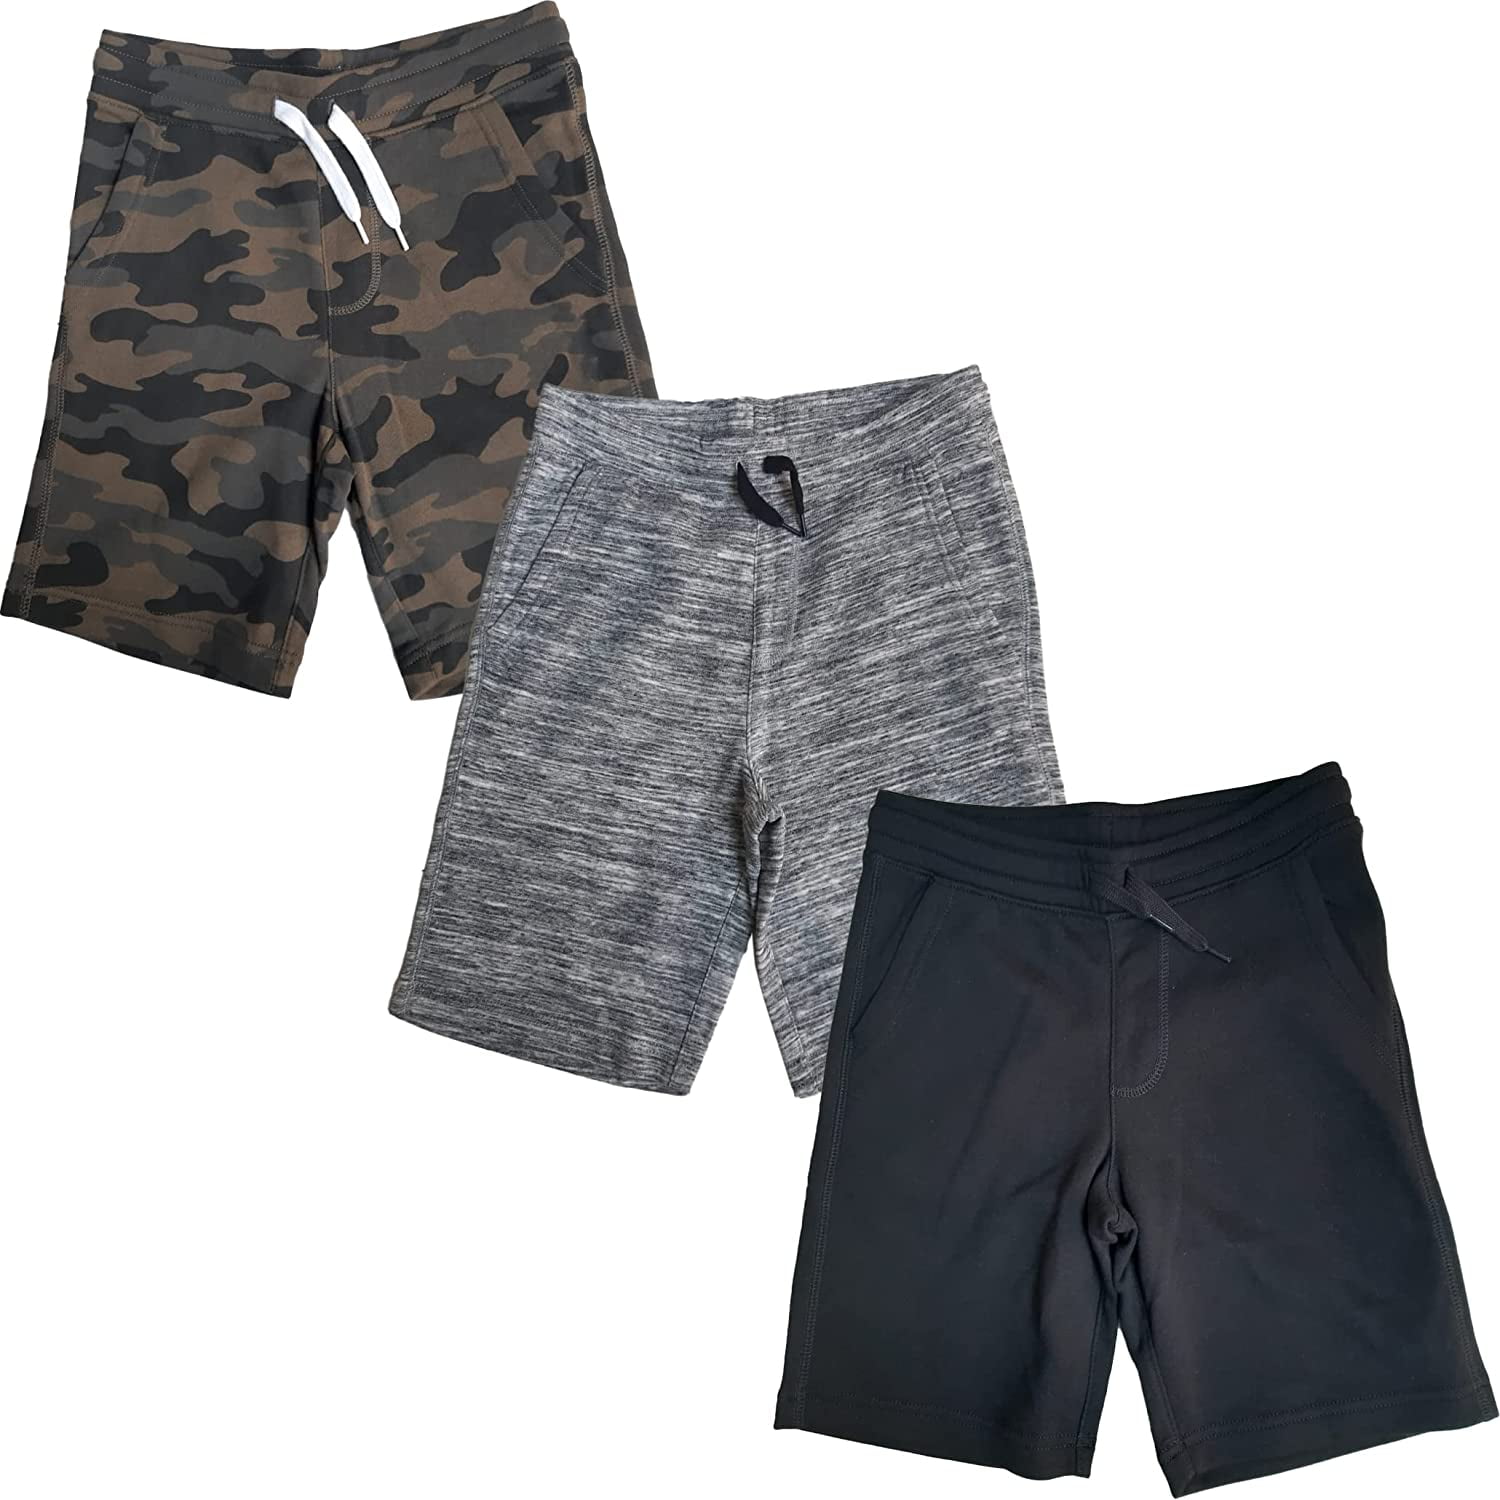 Andrew Scott Boys Fleece Shorts Colors) Pack 3 (Grab Assorted Bag